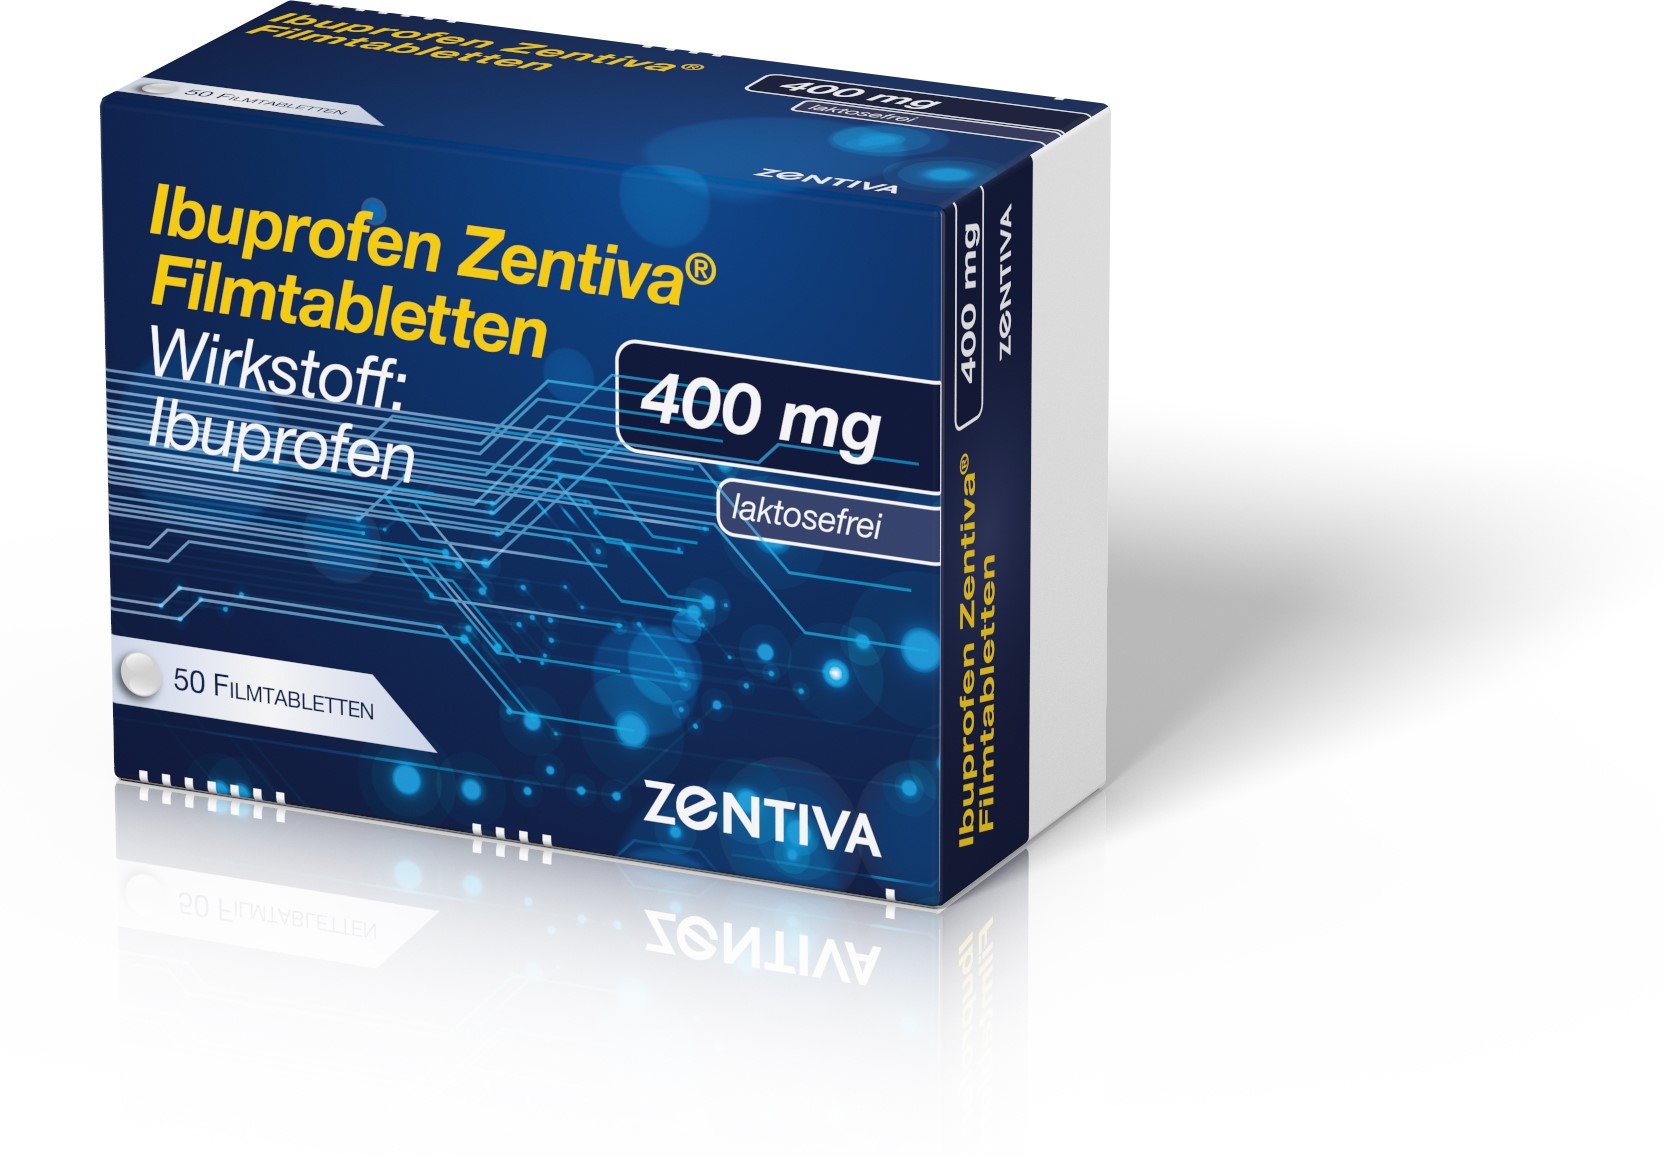 Ibuprofen Zentiva 400mg Filmtabletten